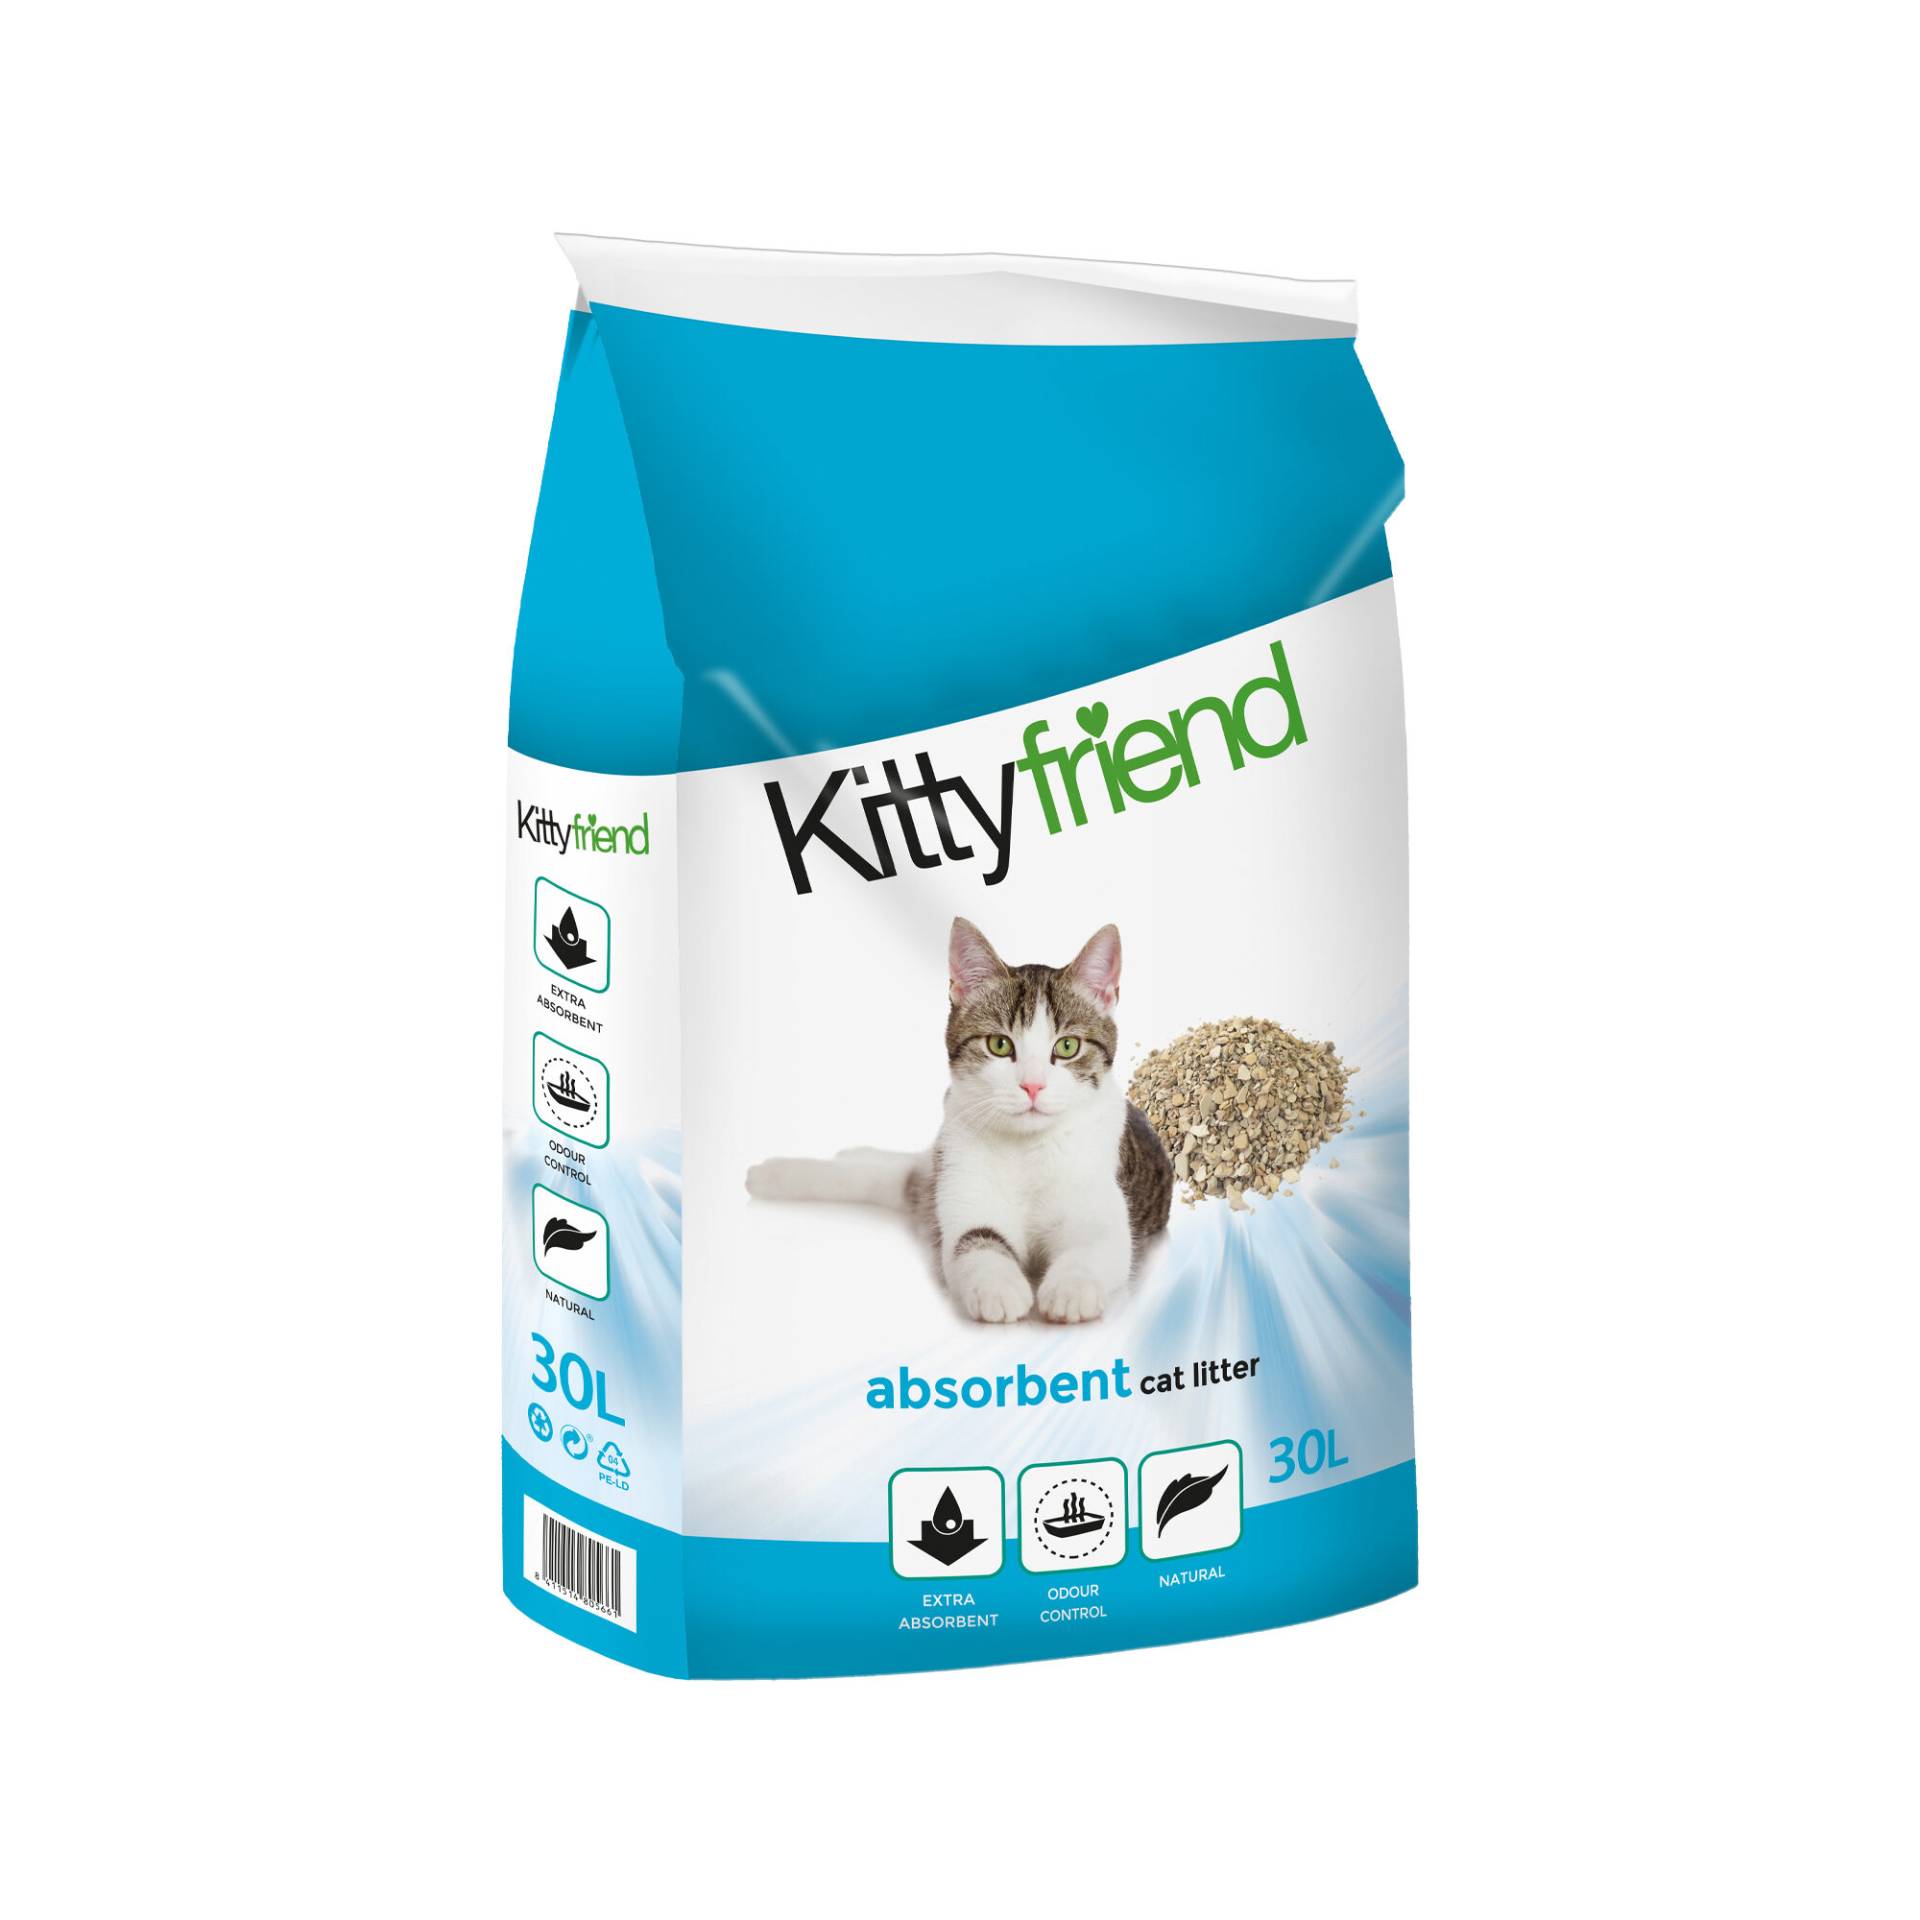 Kitty Friend - absorbierende Katzenstreu - 30 l von Kitty Friend